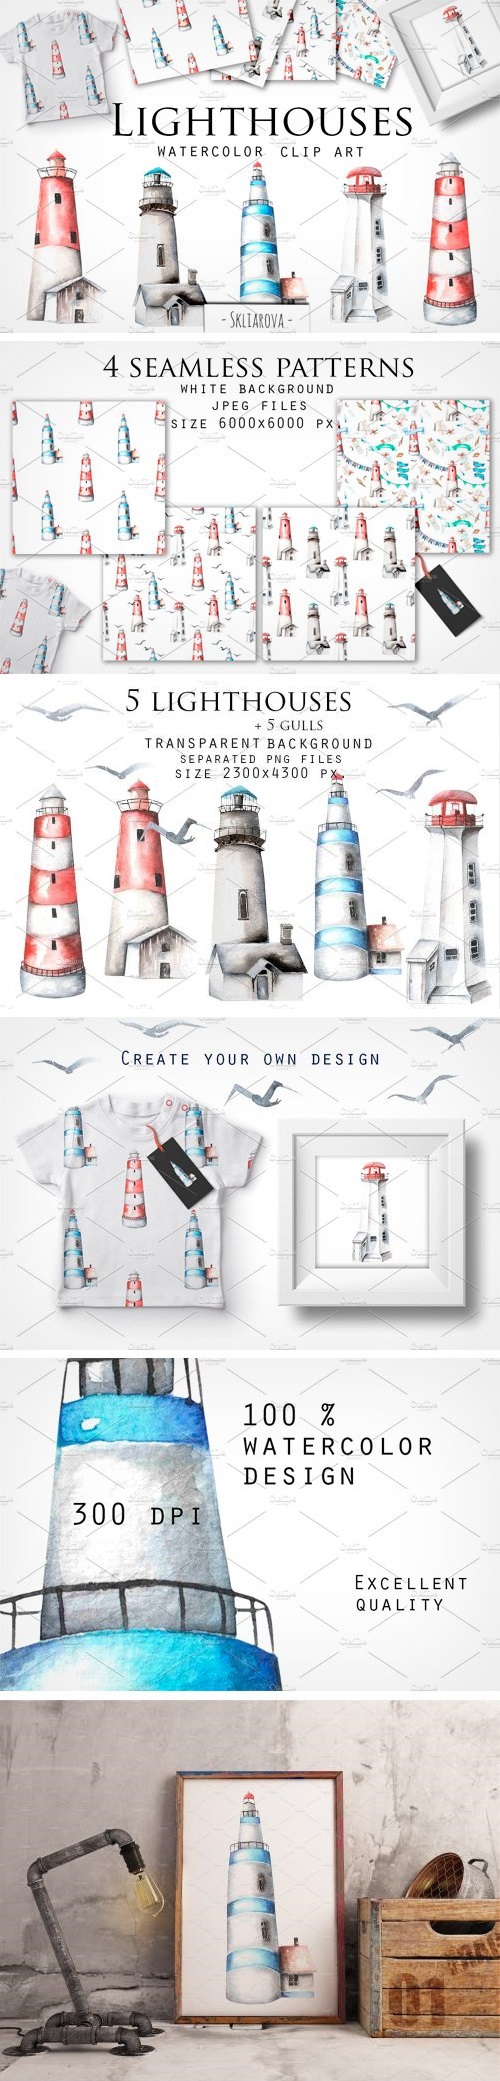 Lighthouses. Watercolor CLip Art. - 2165152